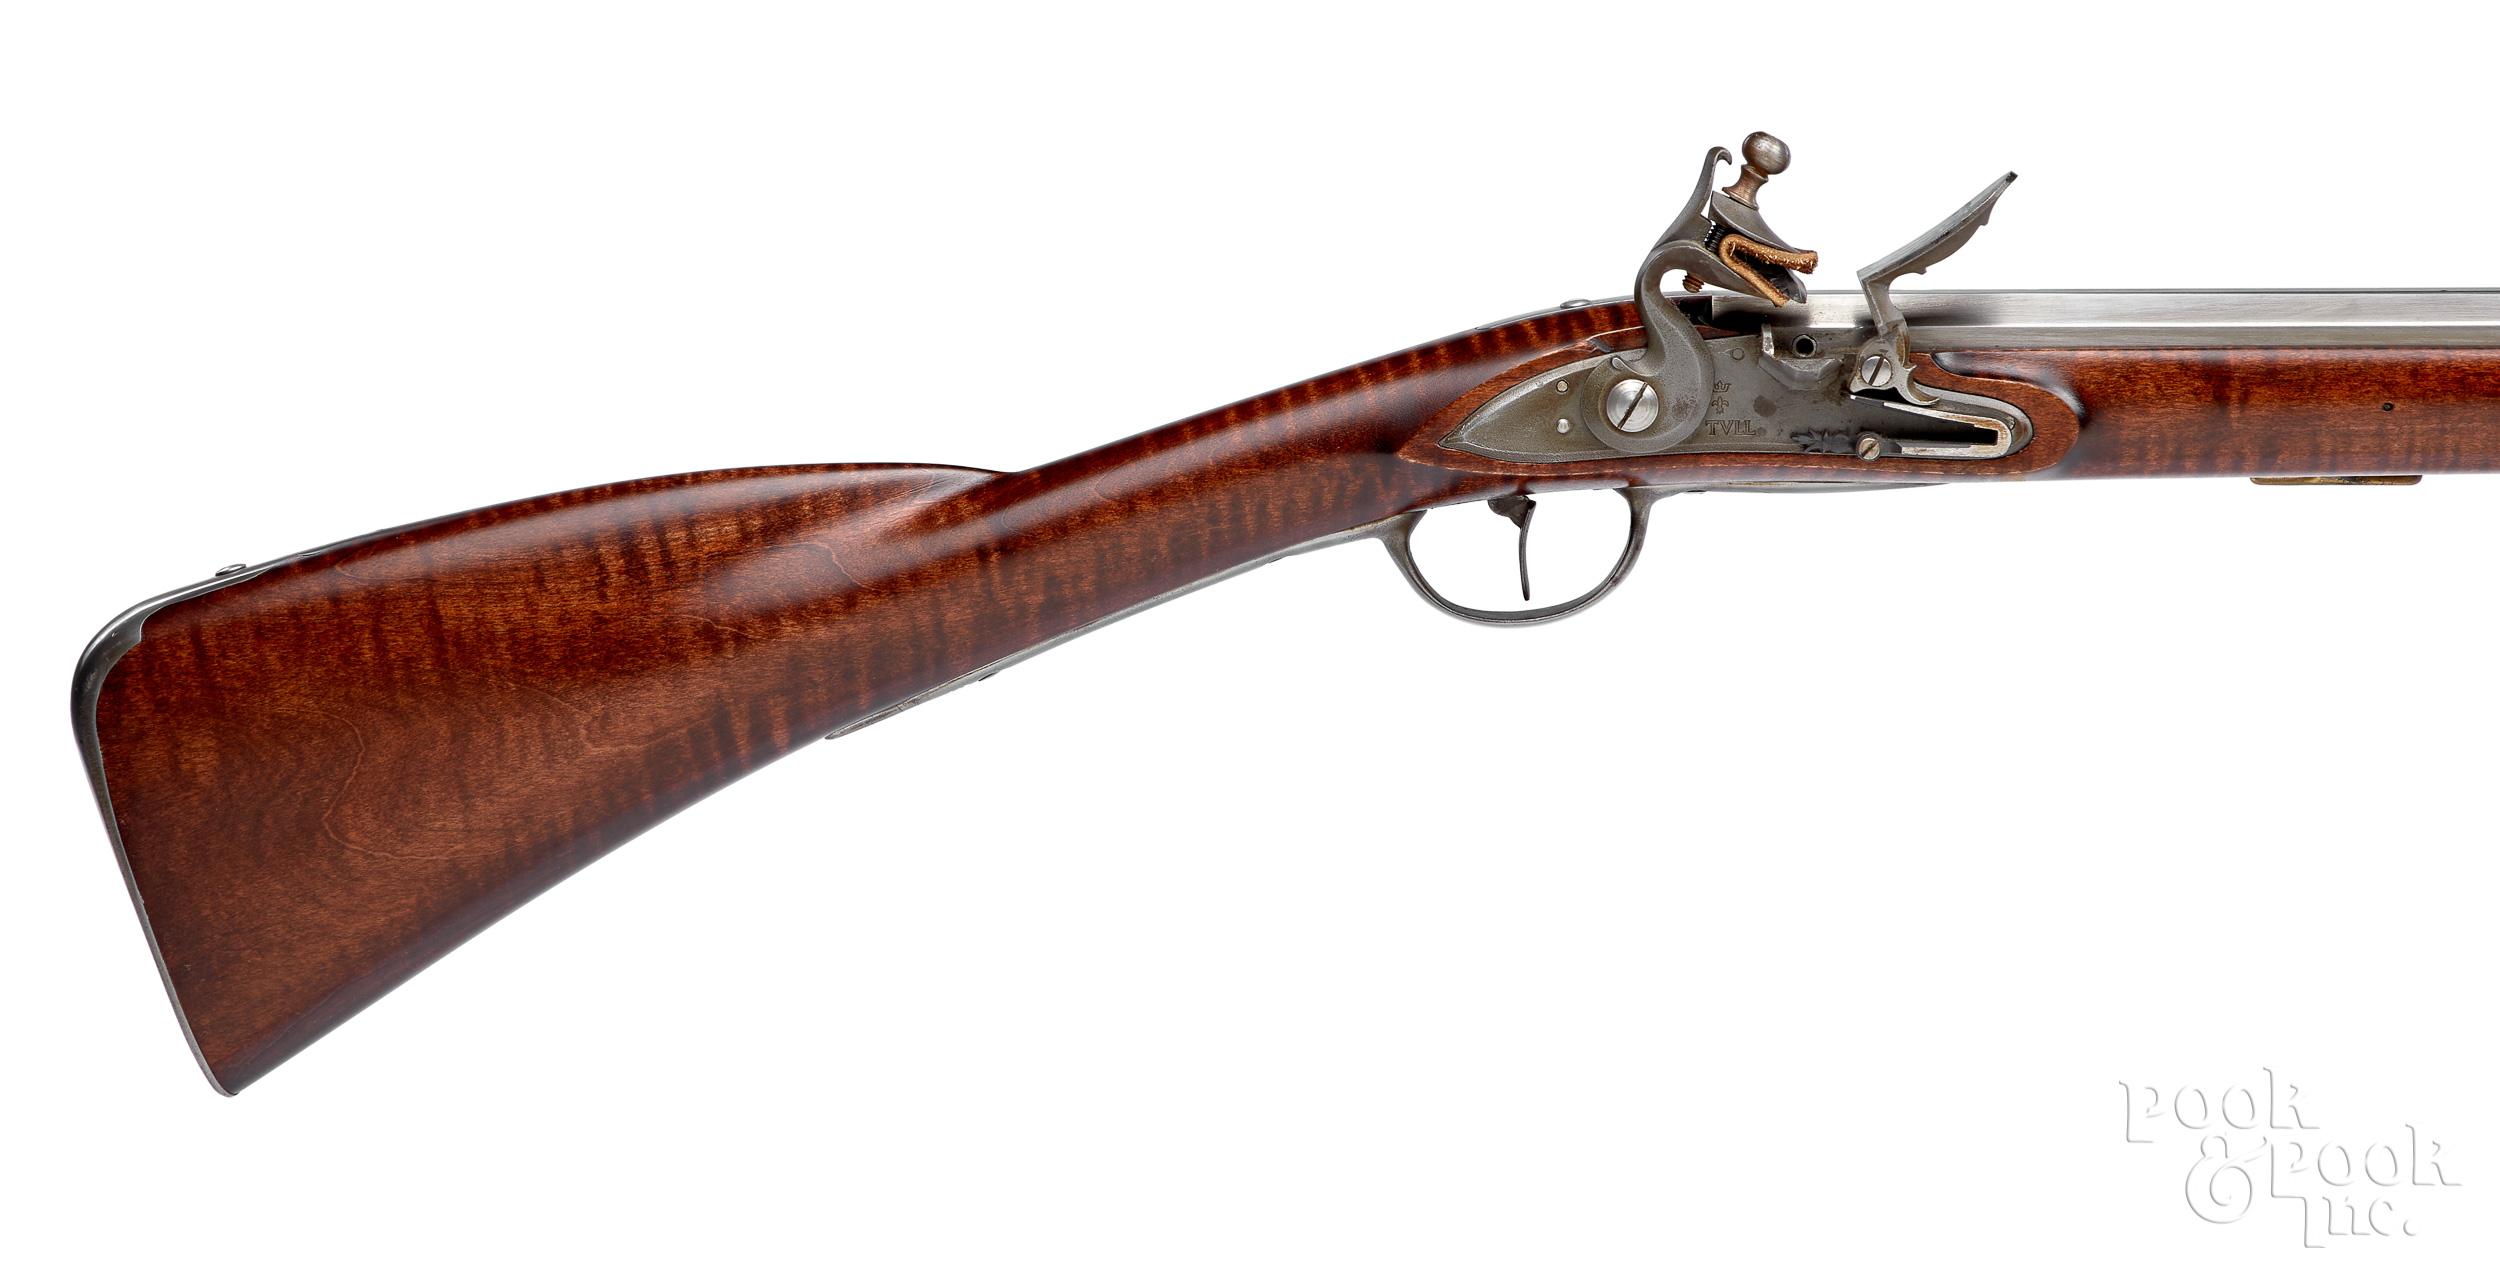 Contemporary flintlock rifle